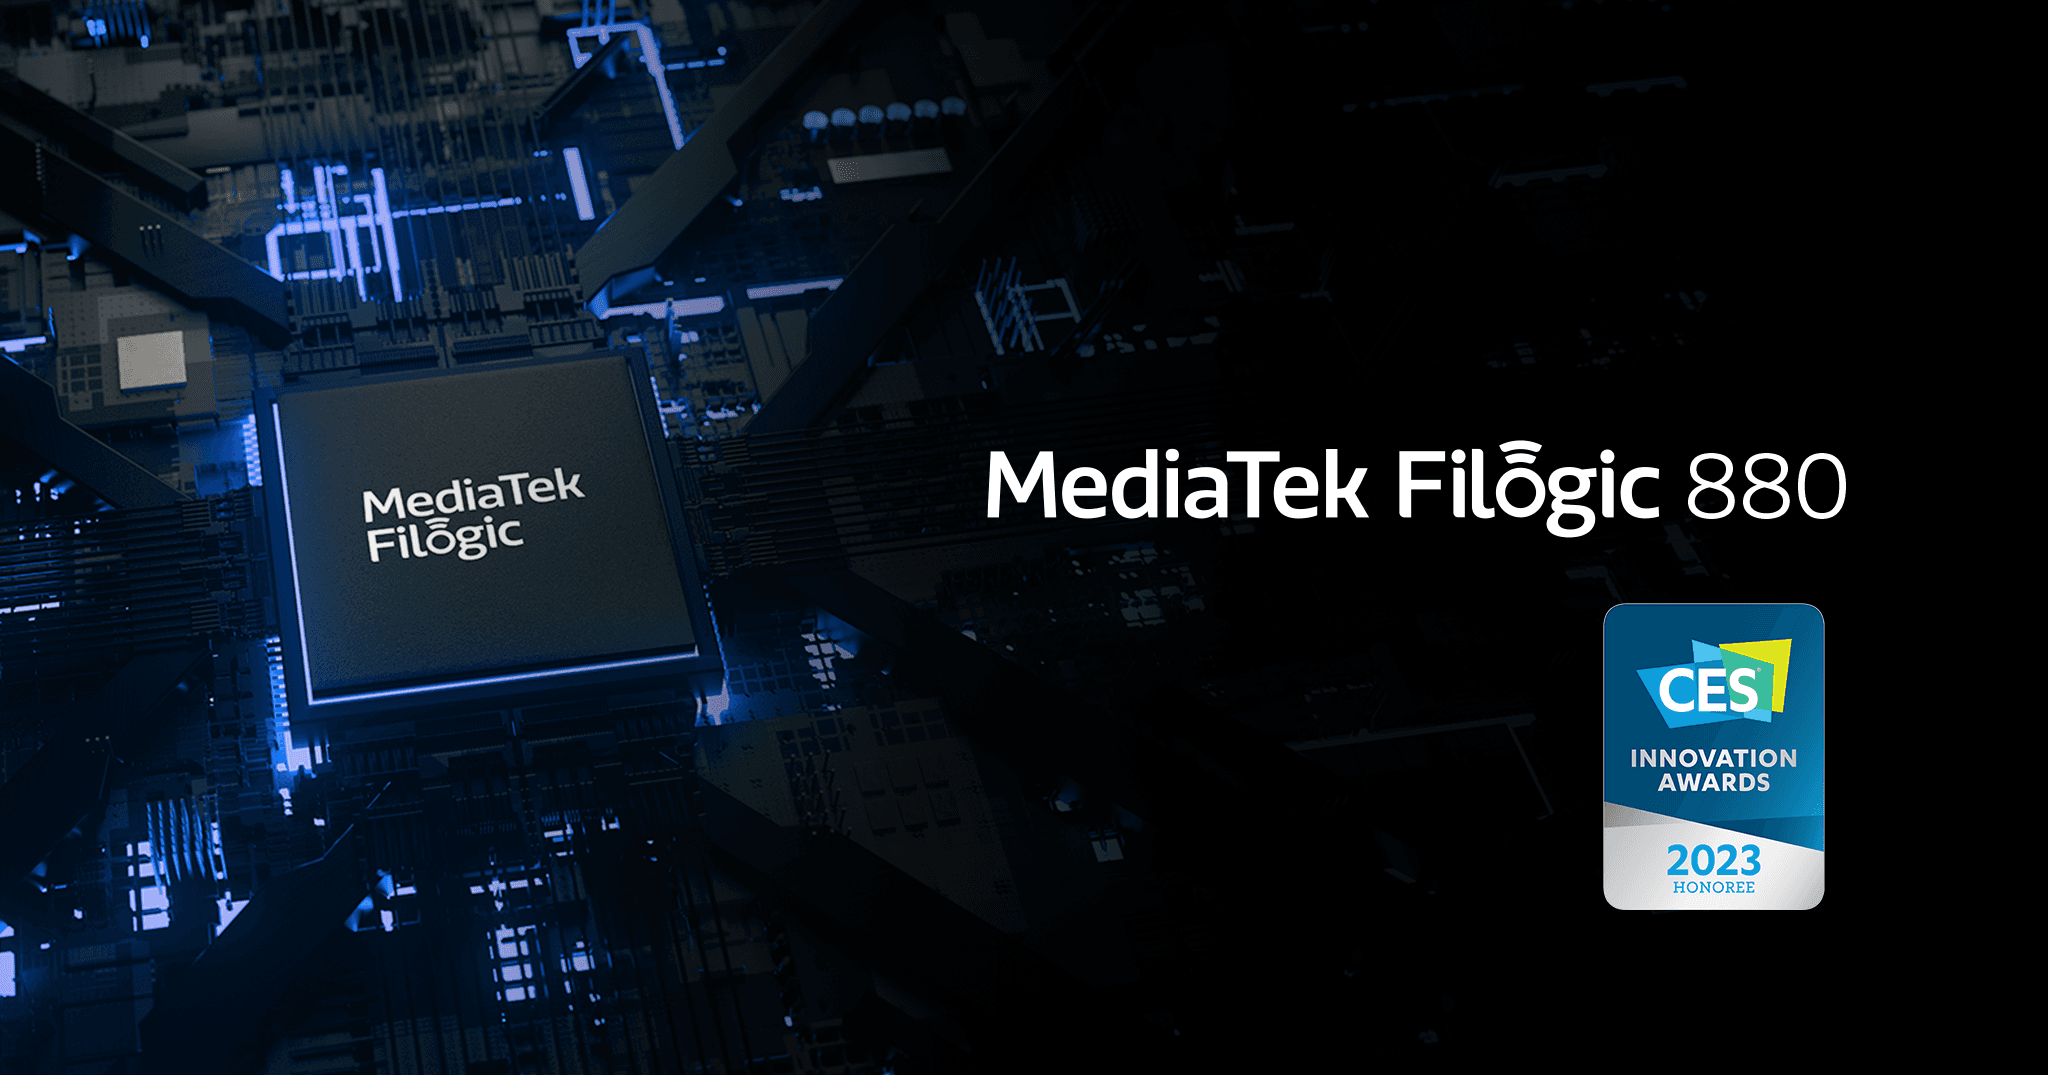 MediaTek Filogic 880 Wi-Fi 7 chip selected as CES 2023 Innovation Awards honoree